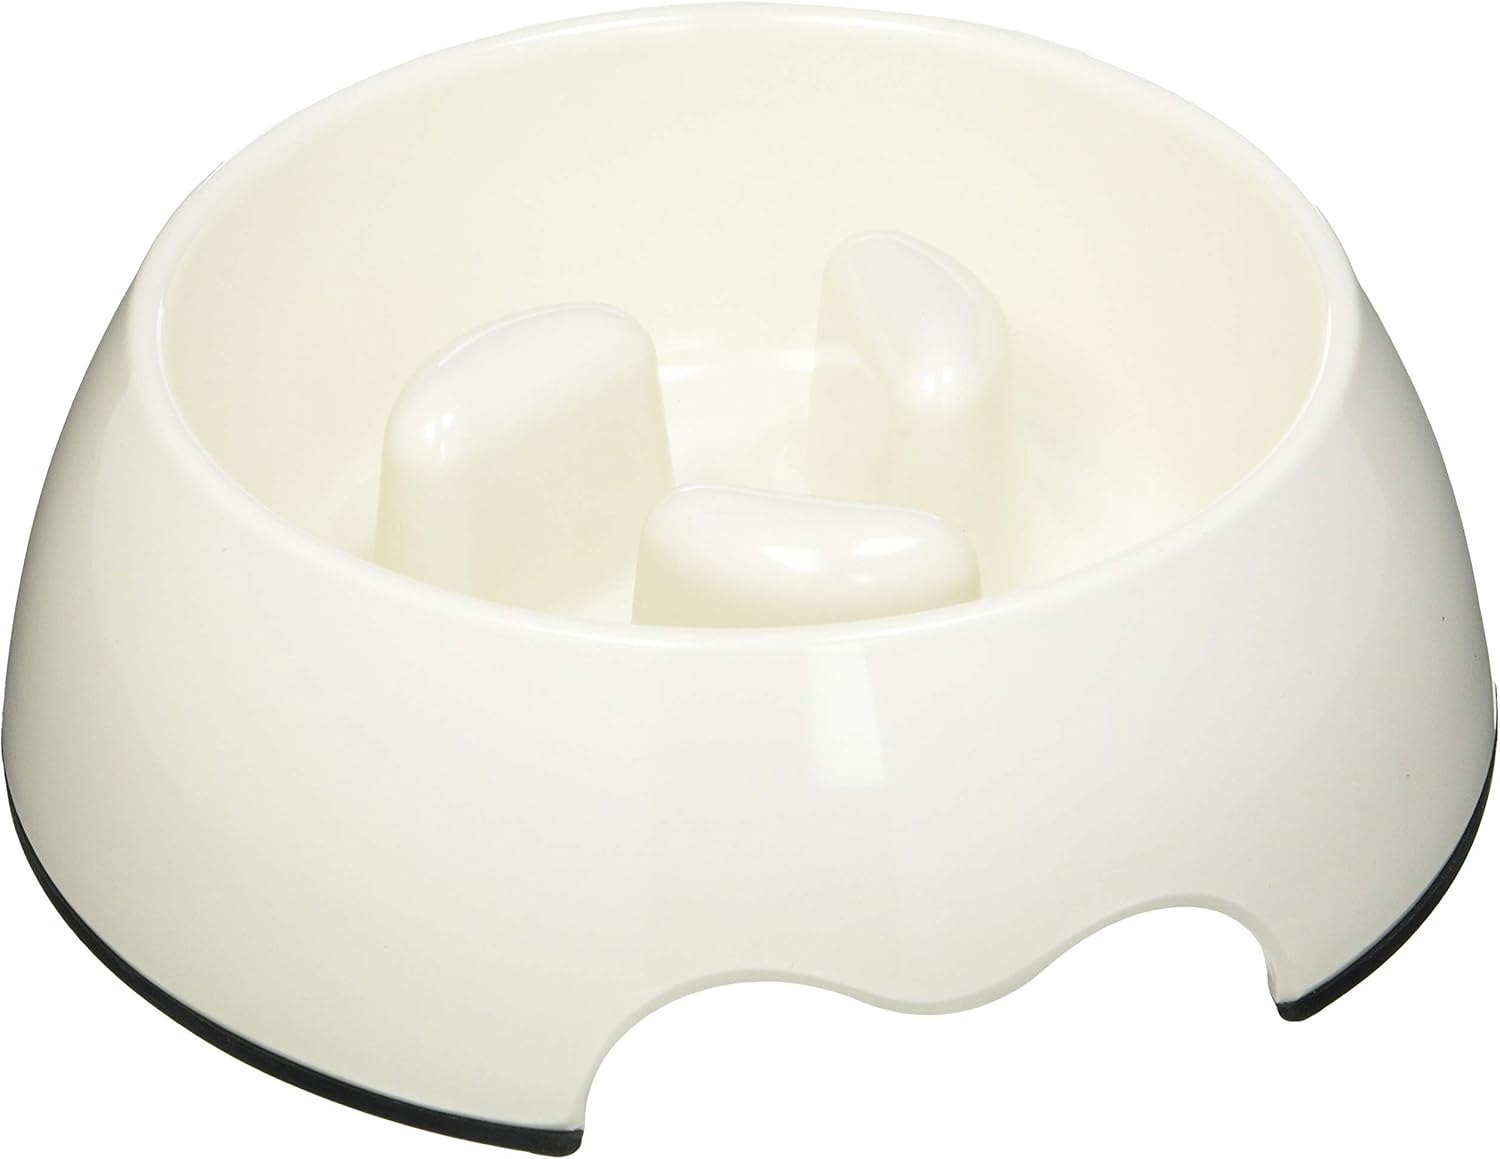 Nobby Anti-Gulping Bowl, 17.5 x 6.5 cm, Cream White?73486-02